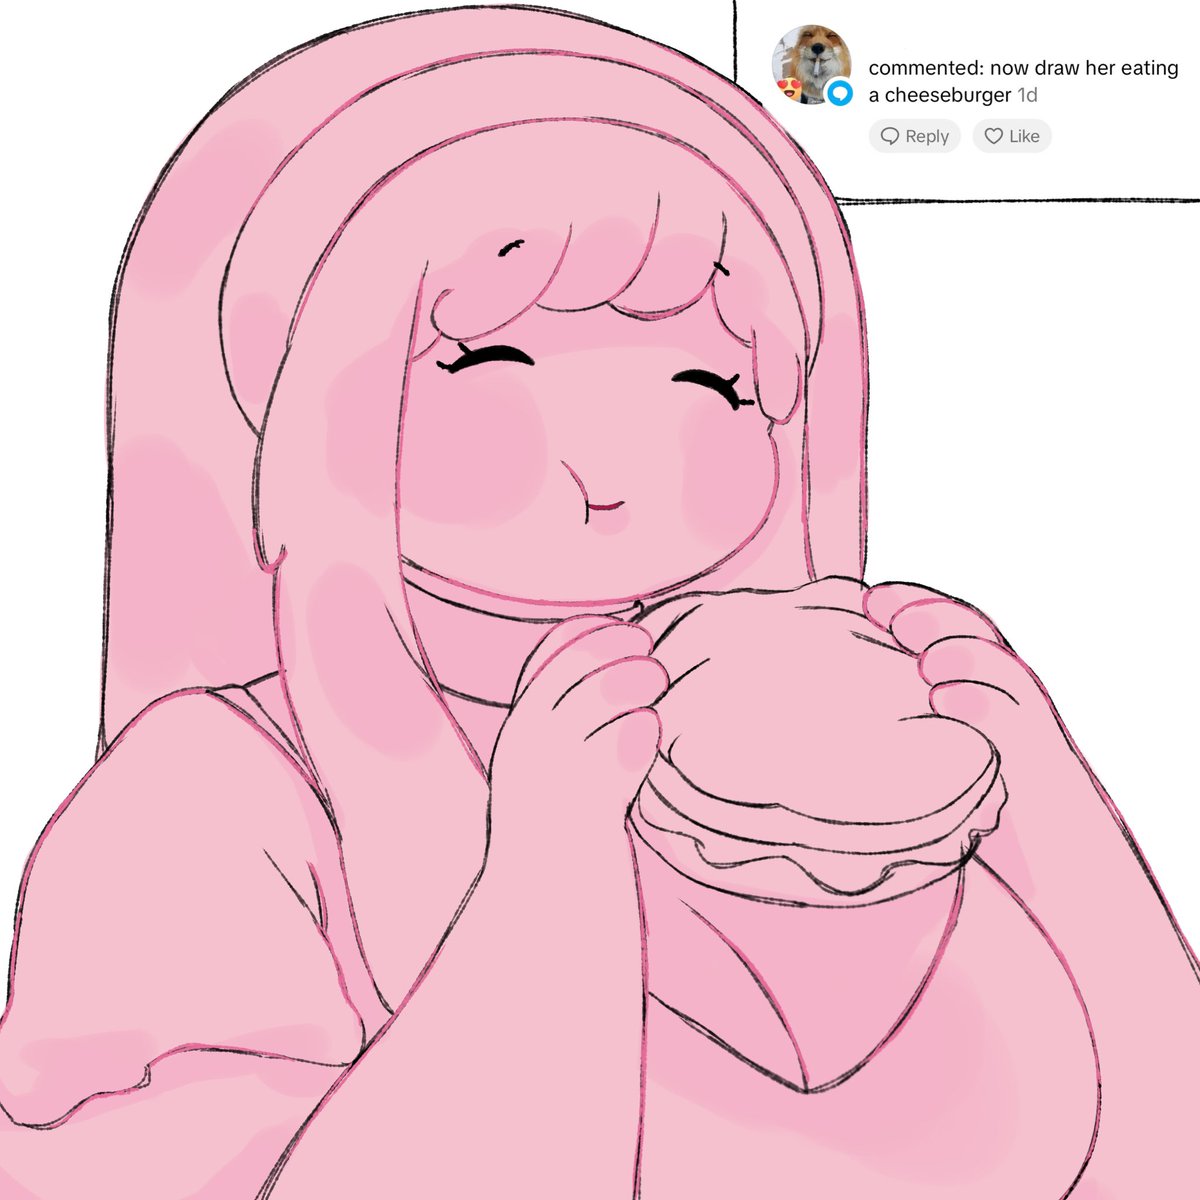 Atleast she’s enjoying her burger #princessbubblegum